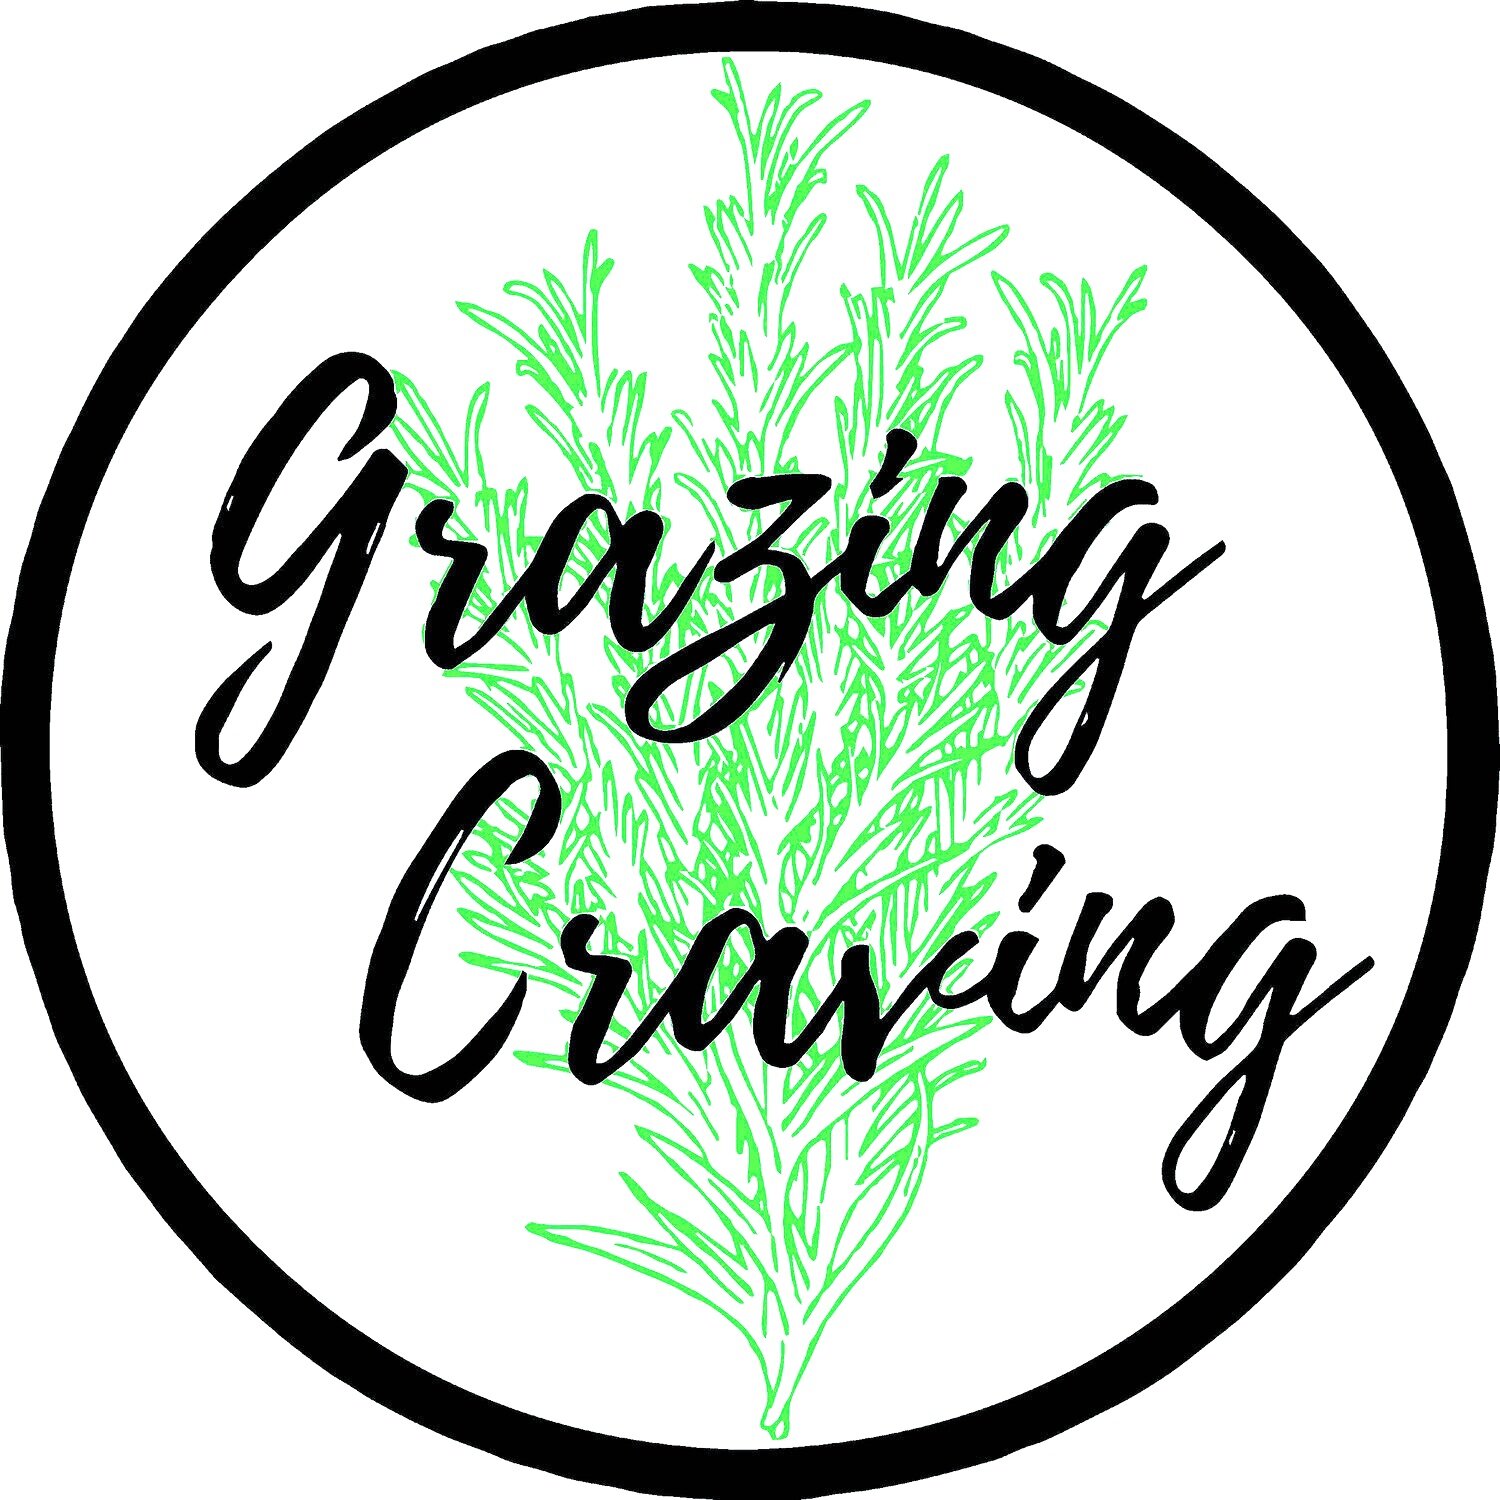 Grazing Craving